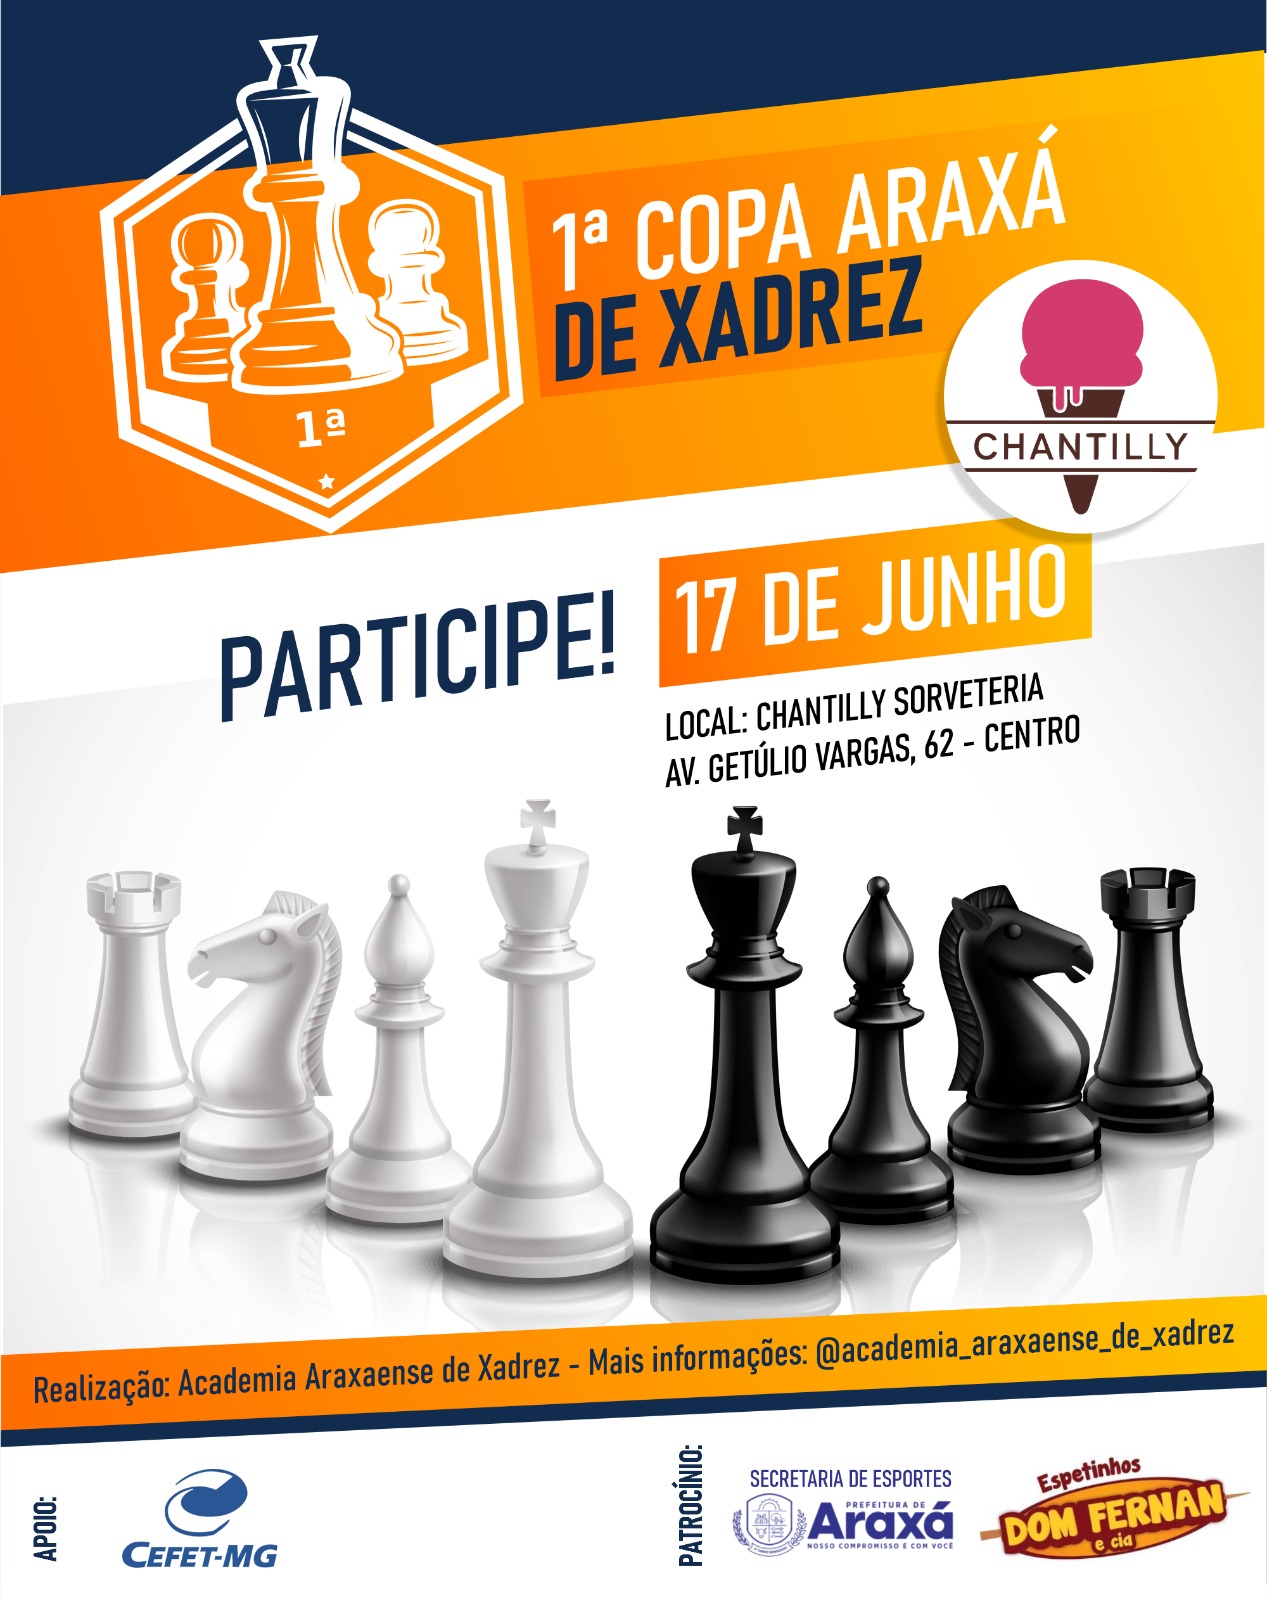 Torneos en Minas Gerais, Brasil